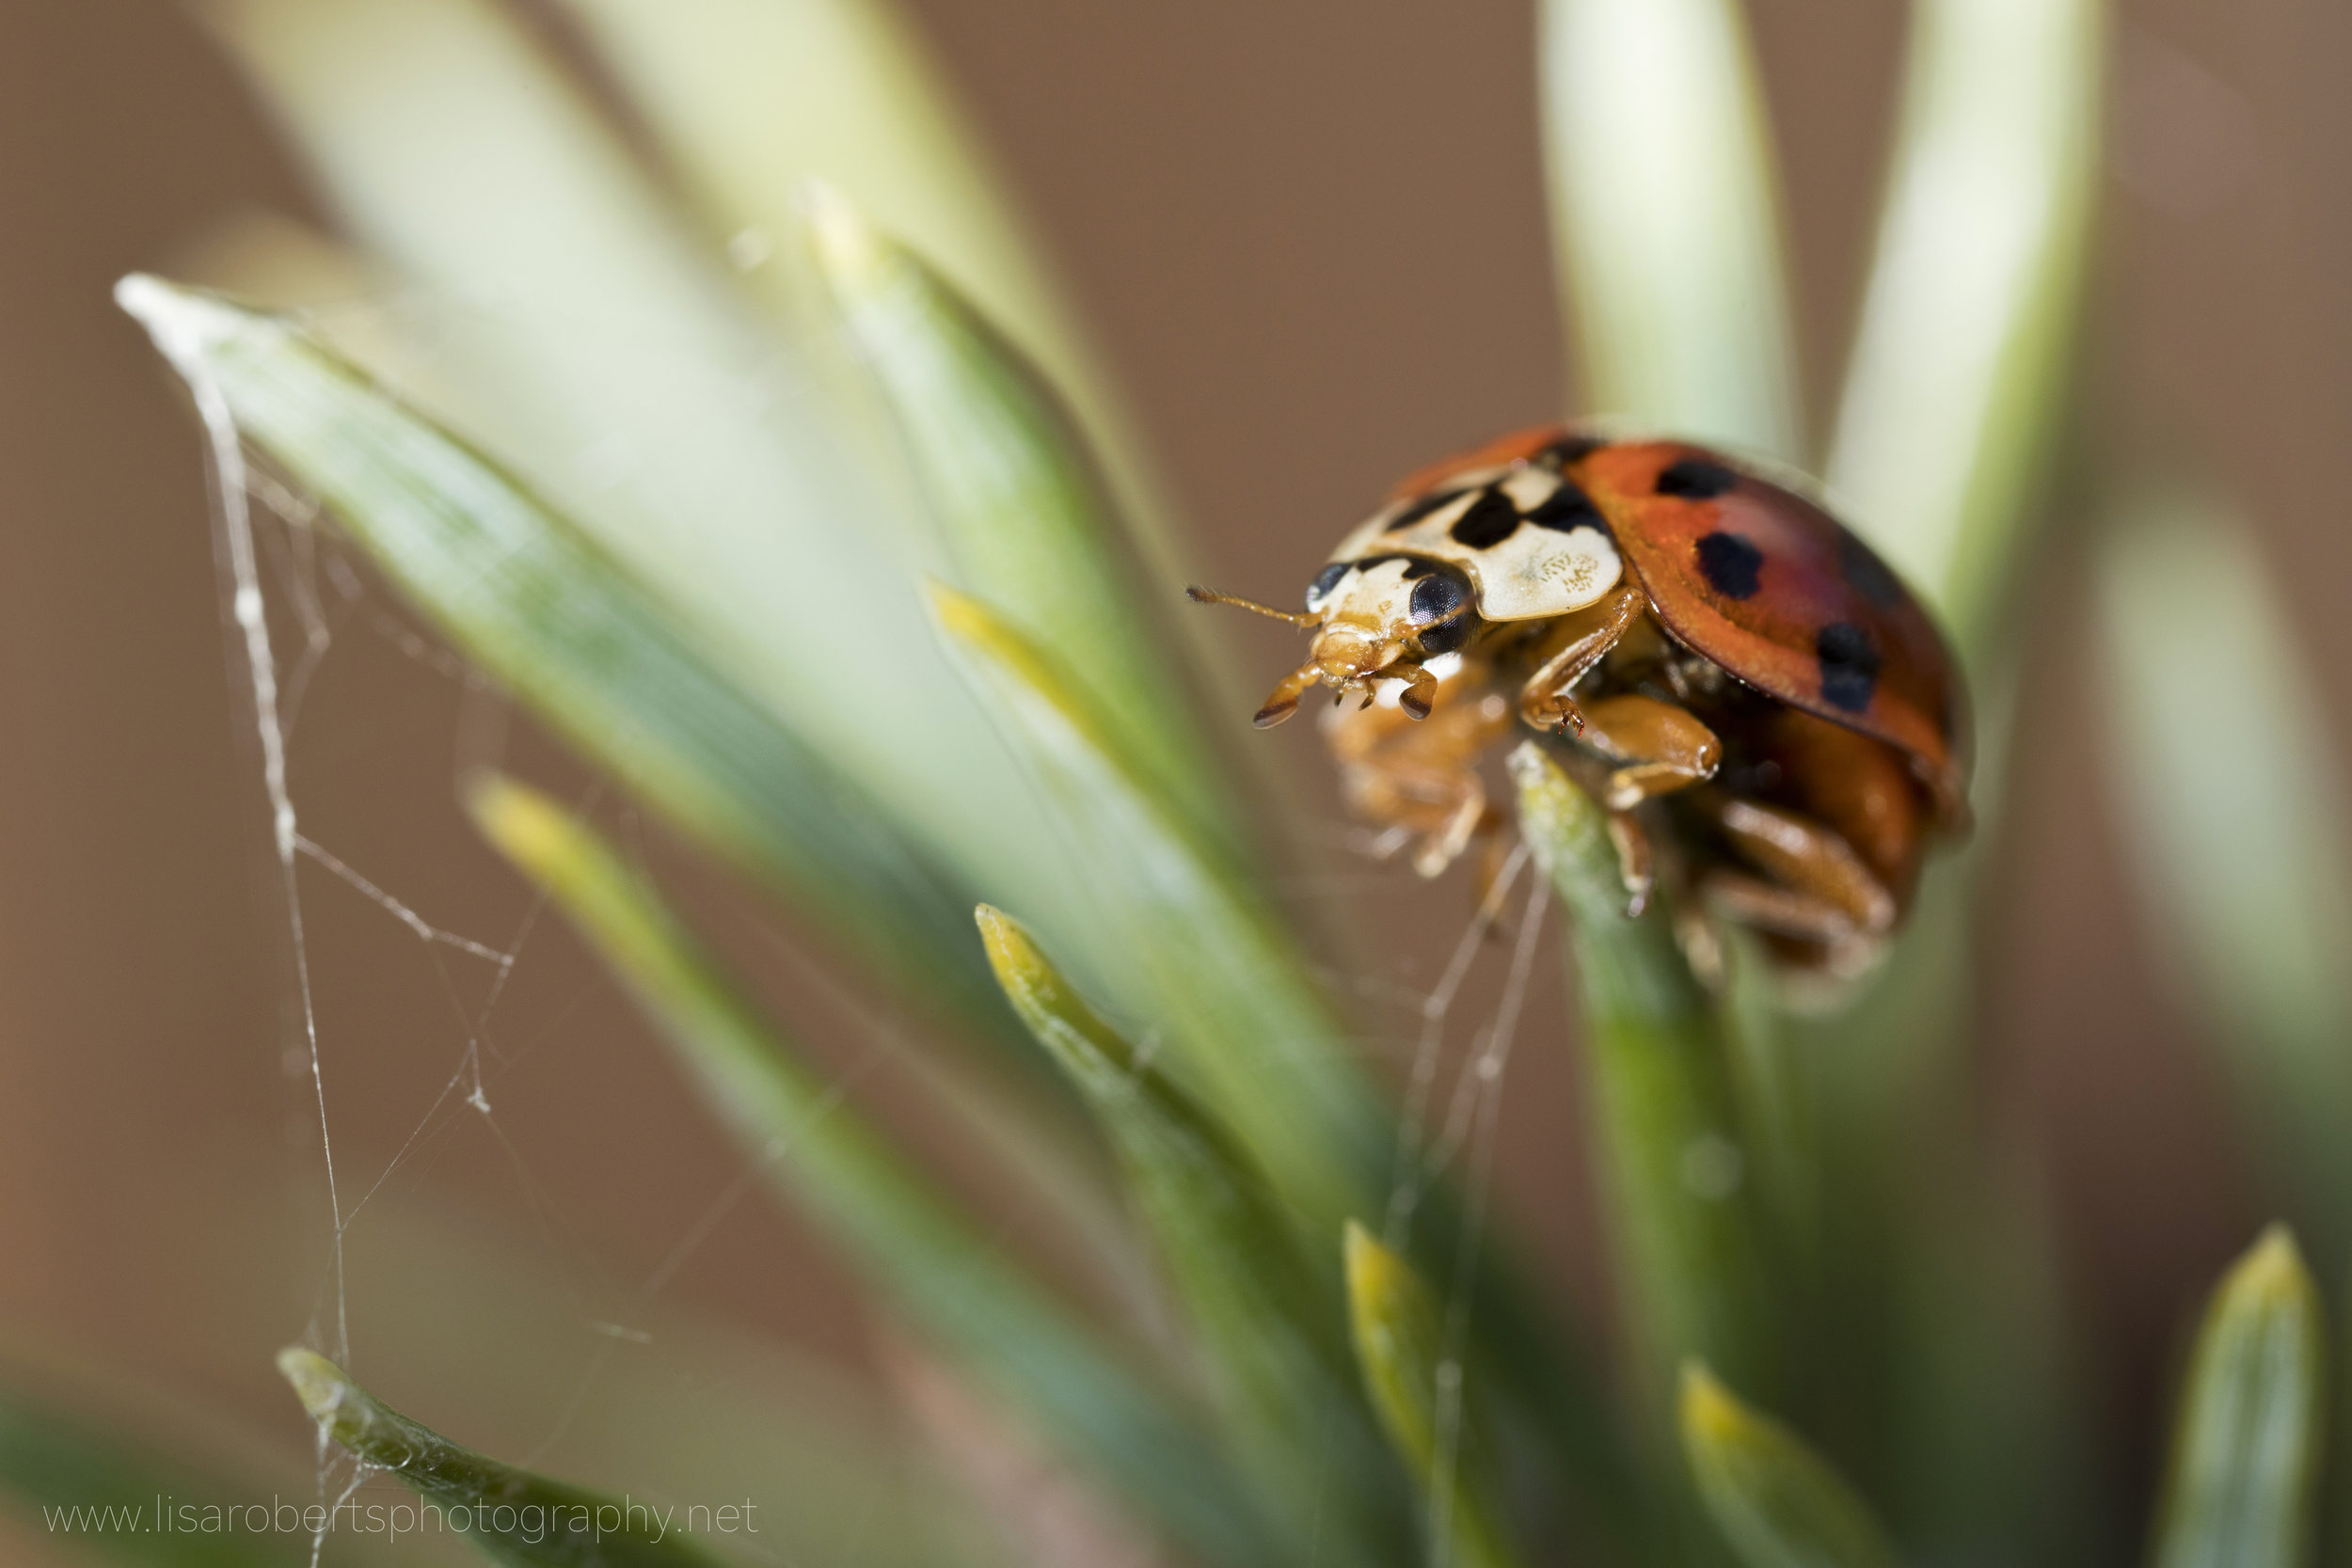  Ladybird on shrub 